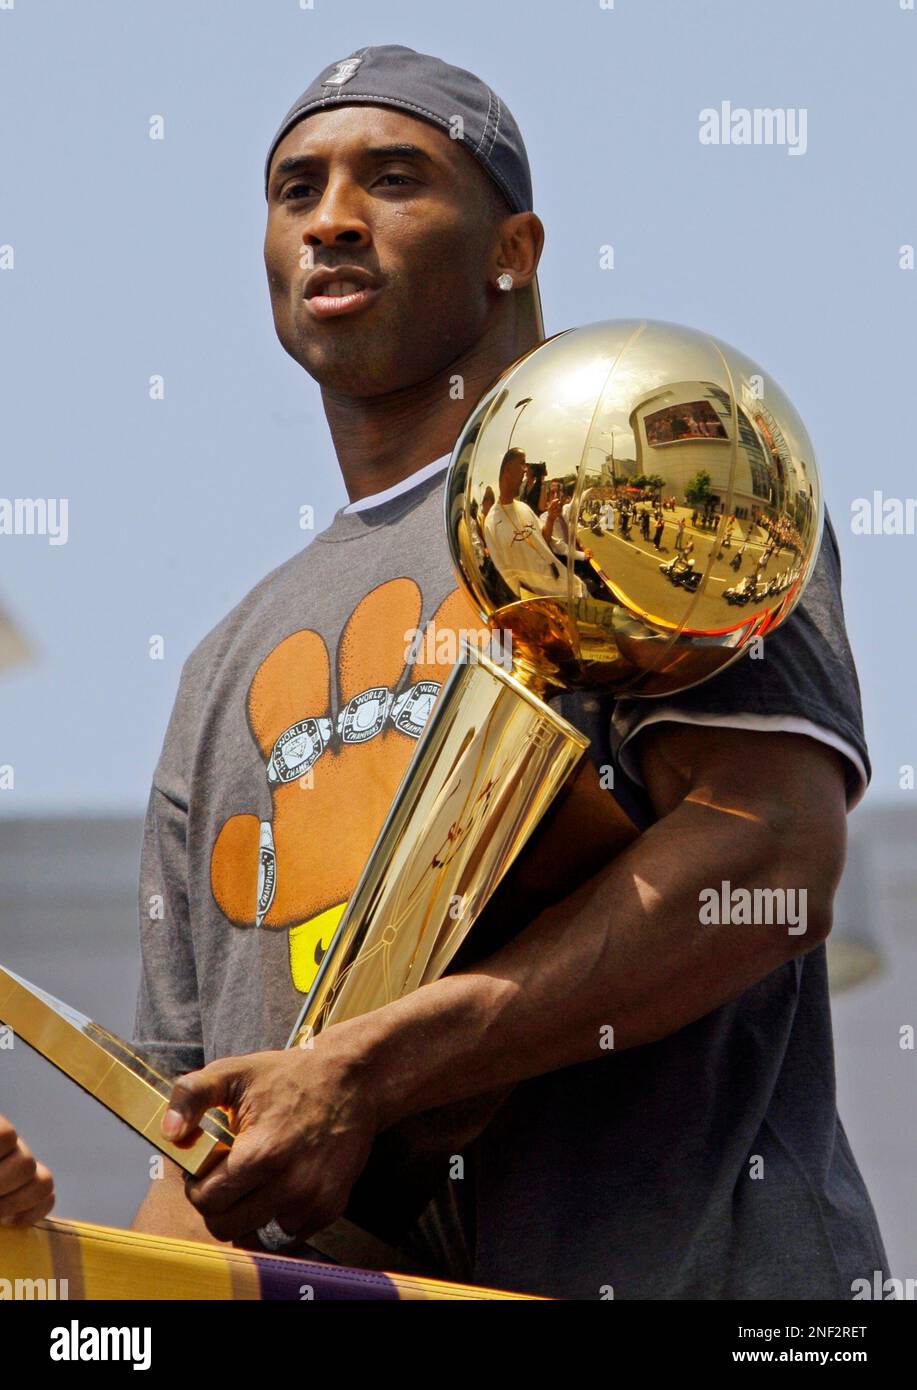 kobe holding trophy